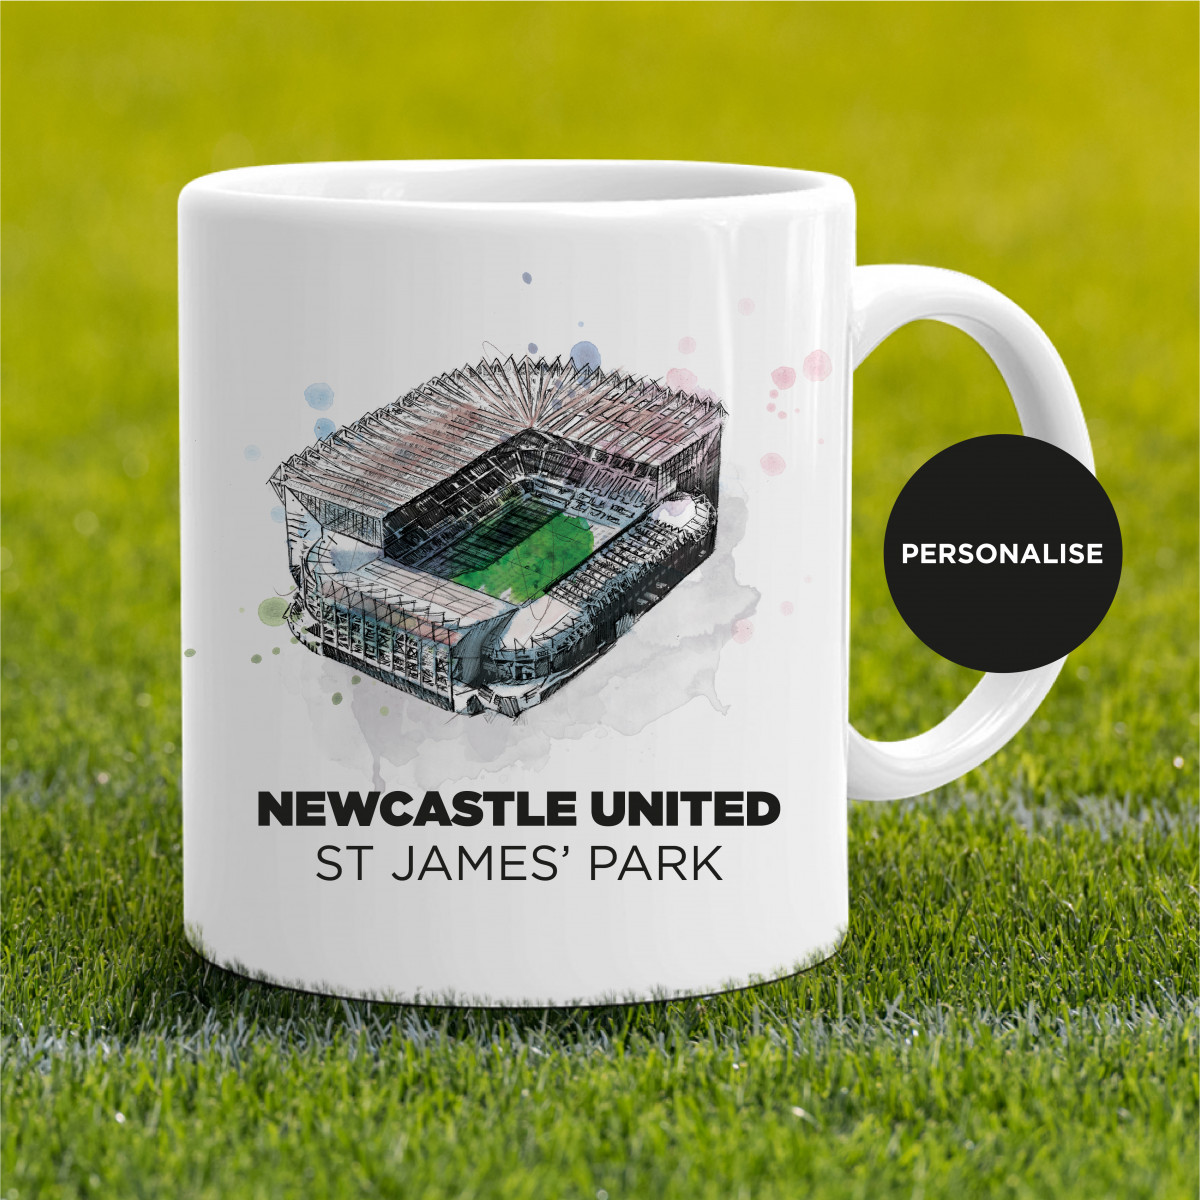 Newcastle United - St James' Park, personalised Mug